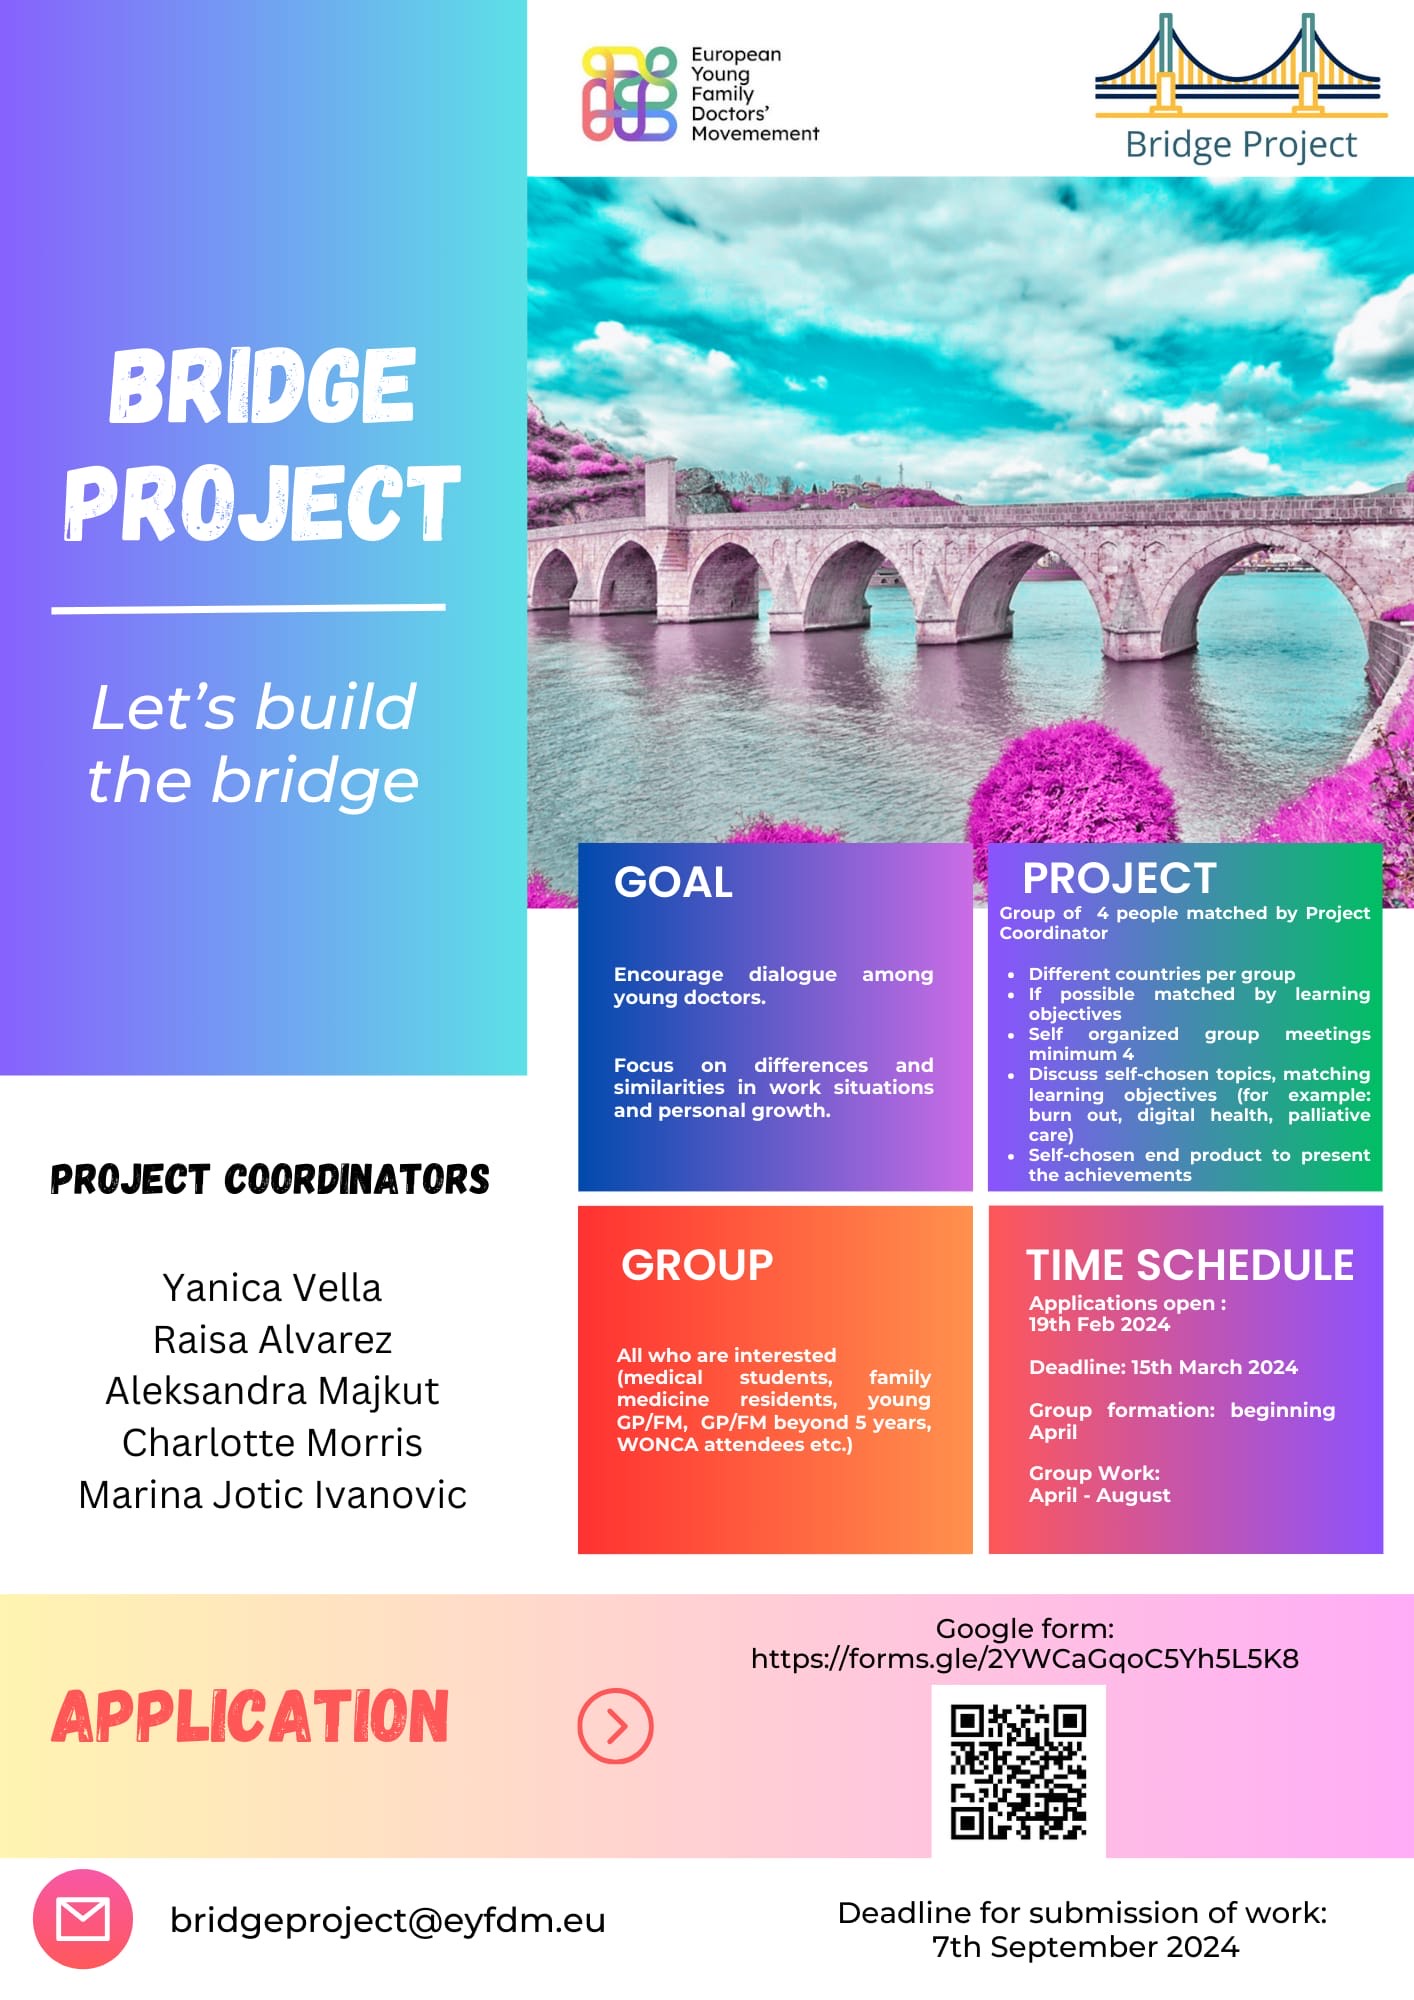 The Bridge Project – apply now